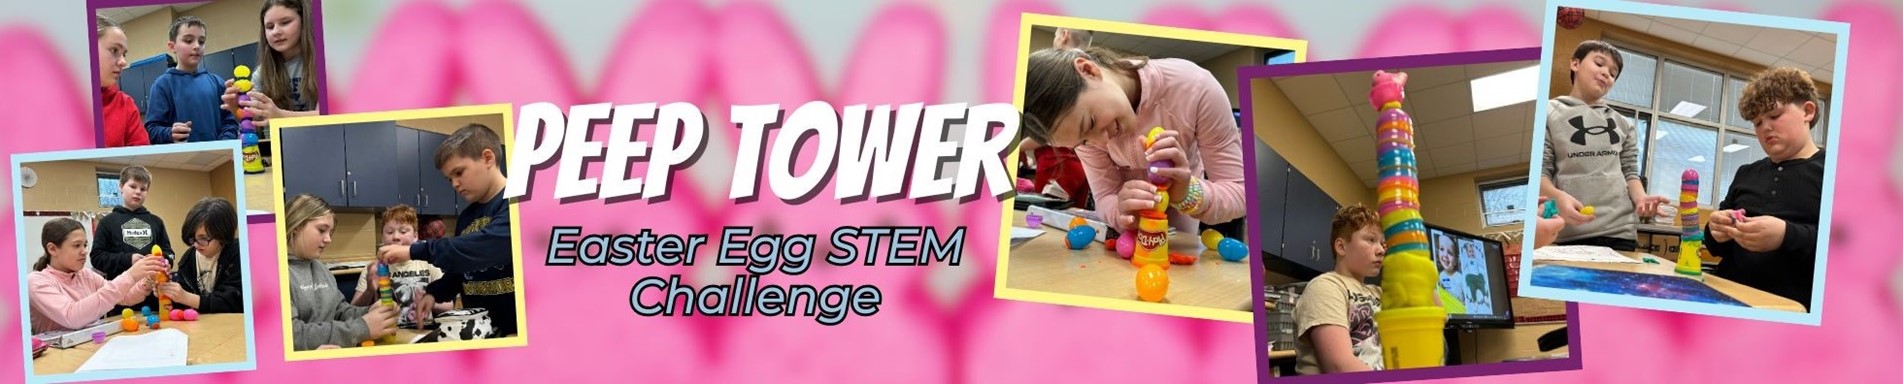 5th grade students complete the Easter Egg STEM challenge